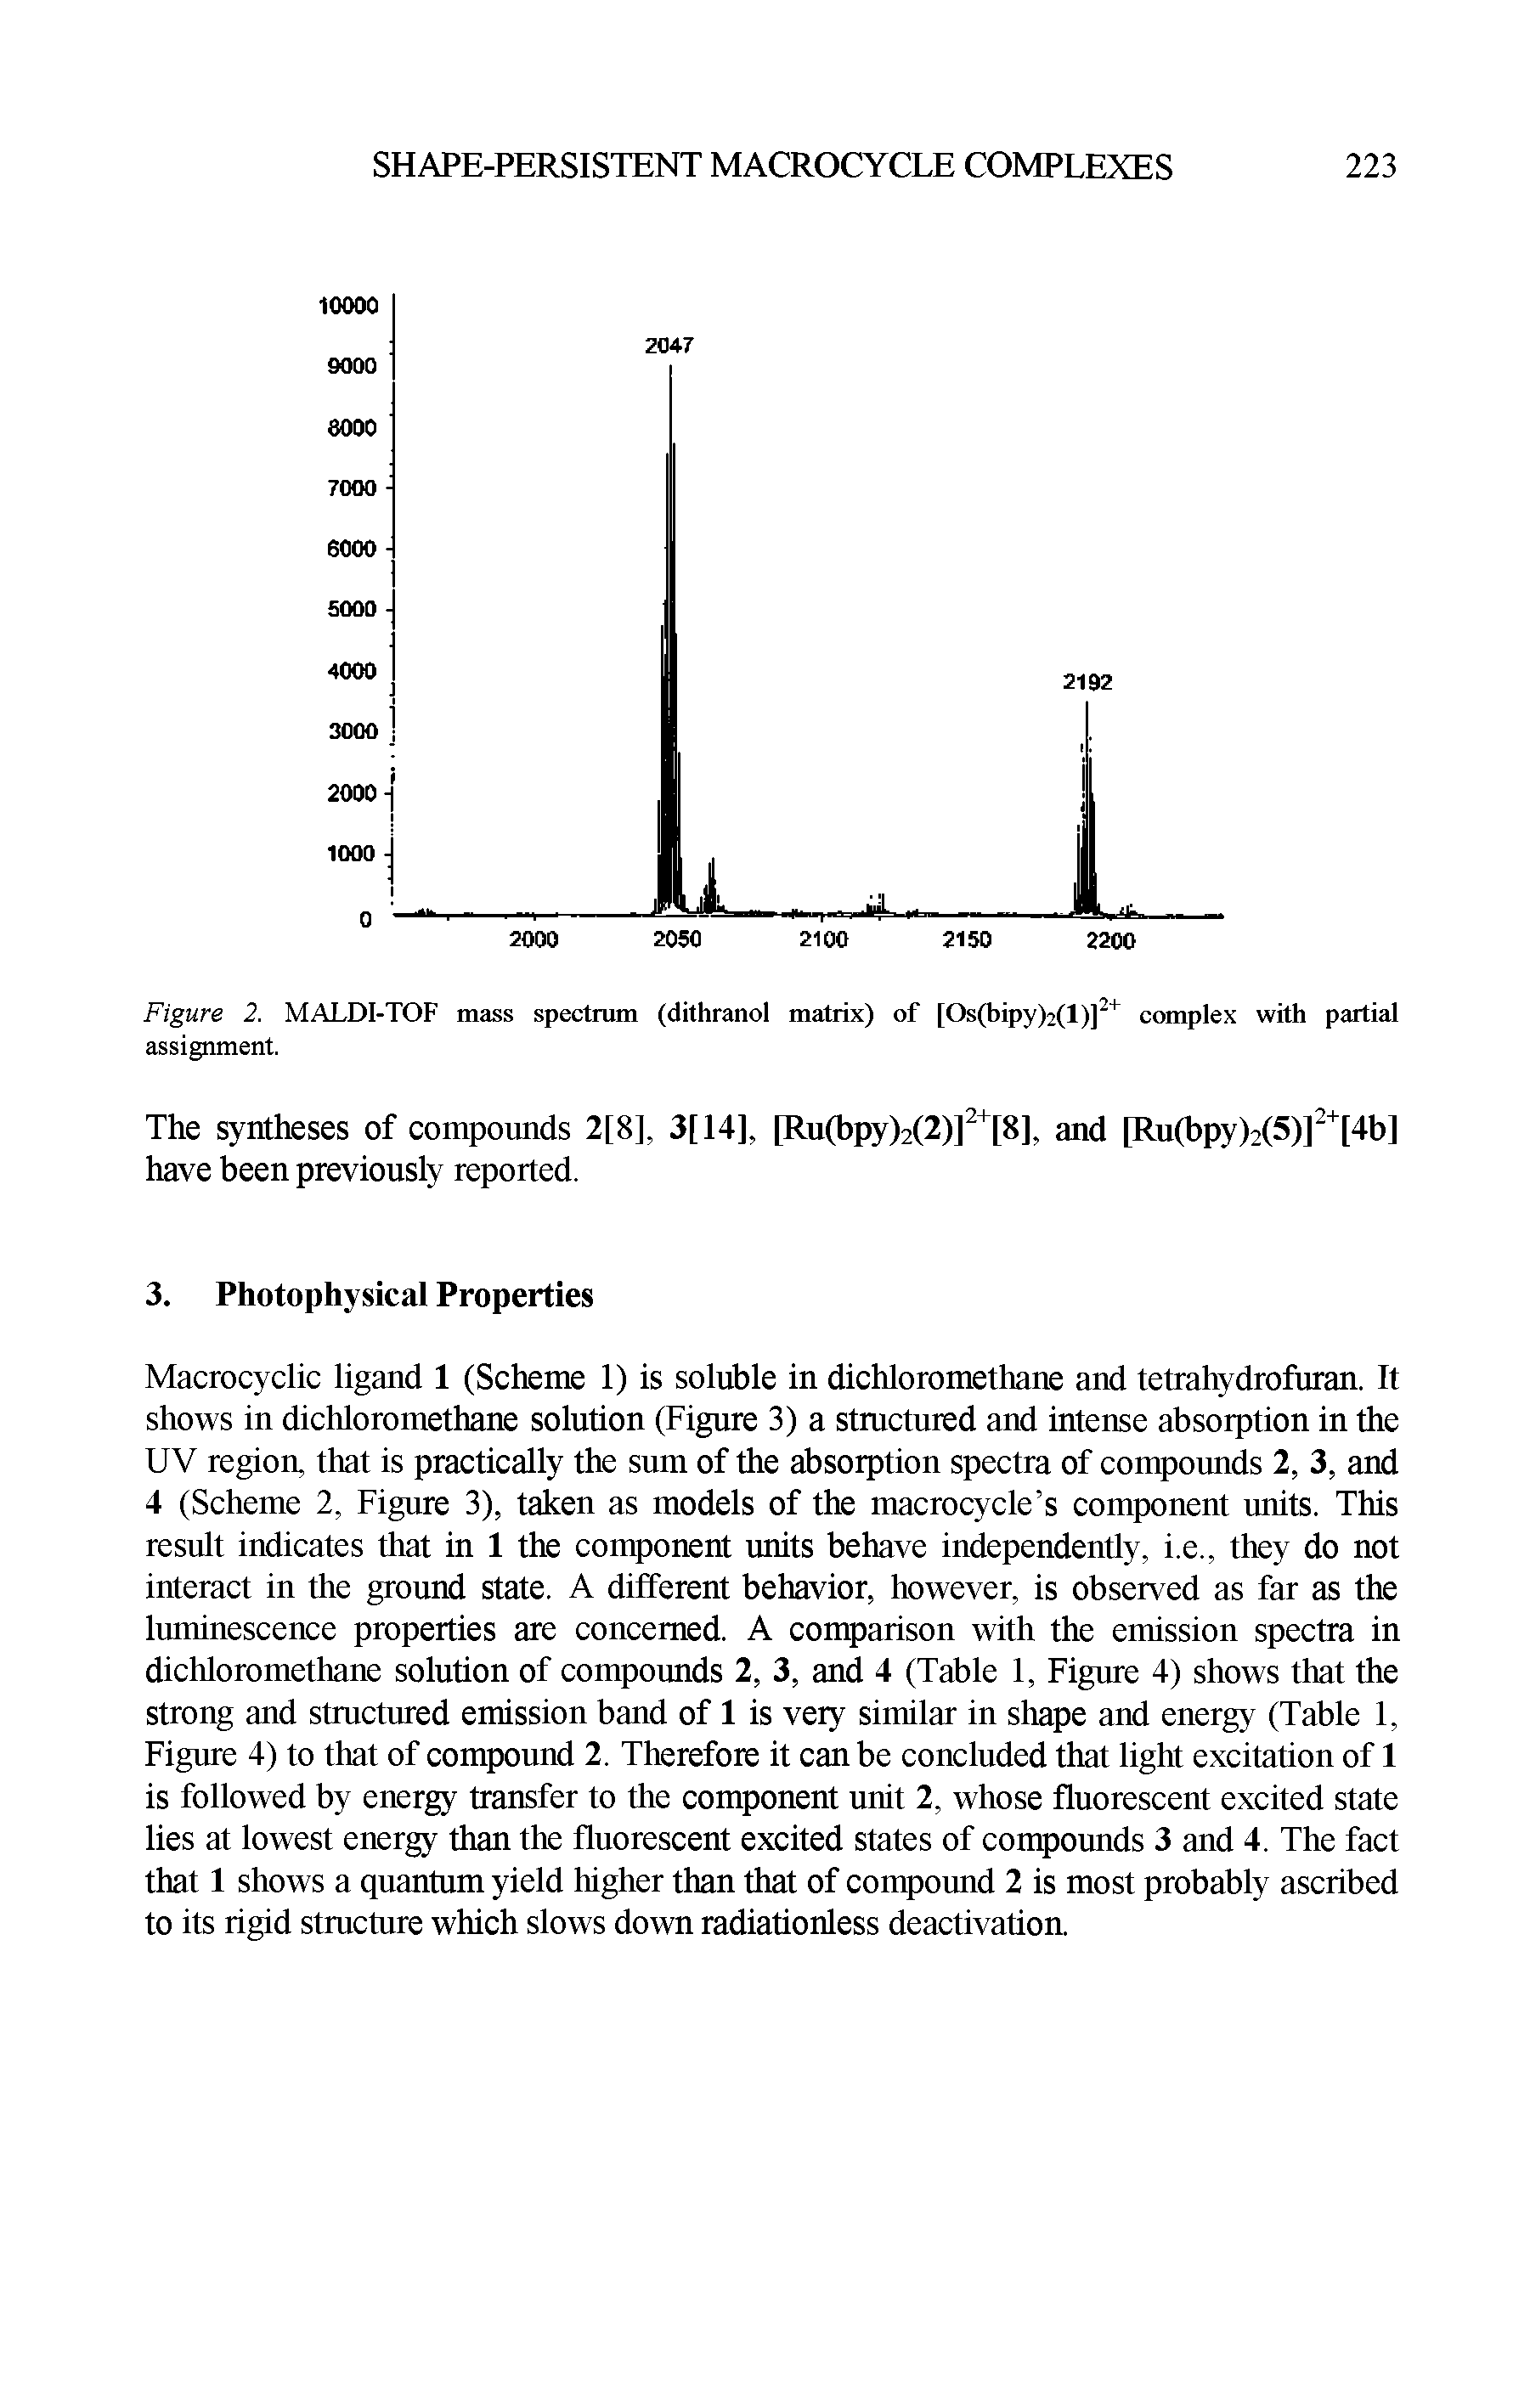 Figure 2. MALDI-TOF mass spectrum (dithranol matrix) of [Os(bipy)2(l)]2+ complex with partial assignment.